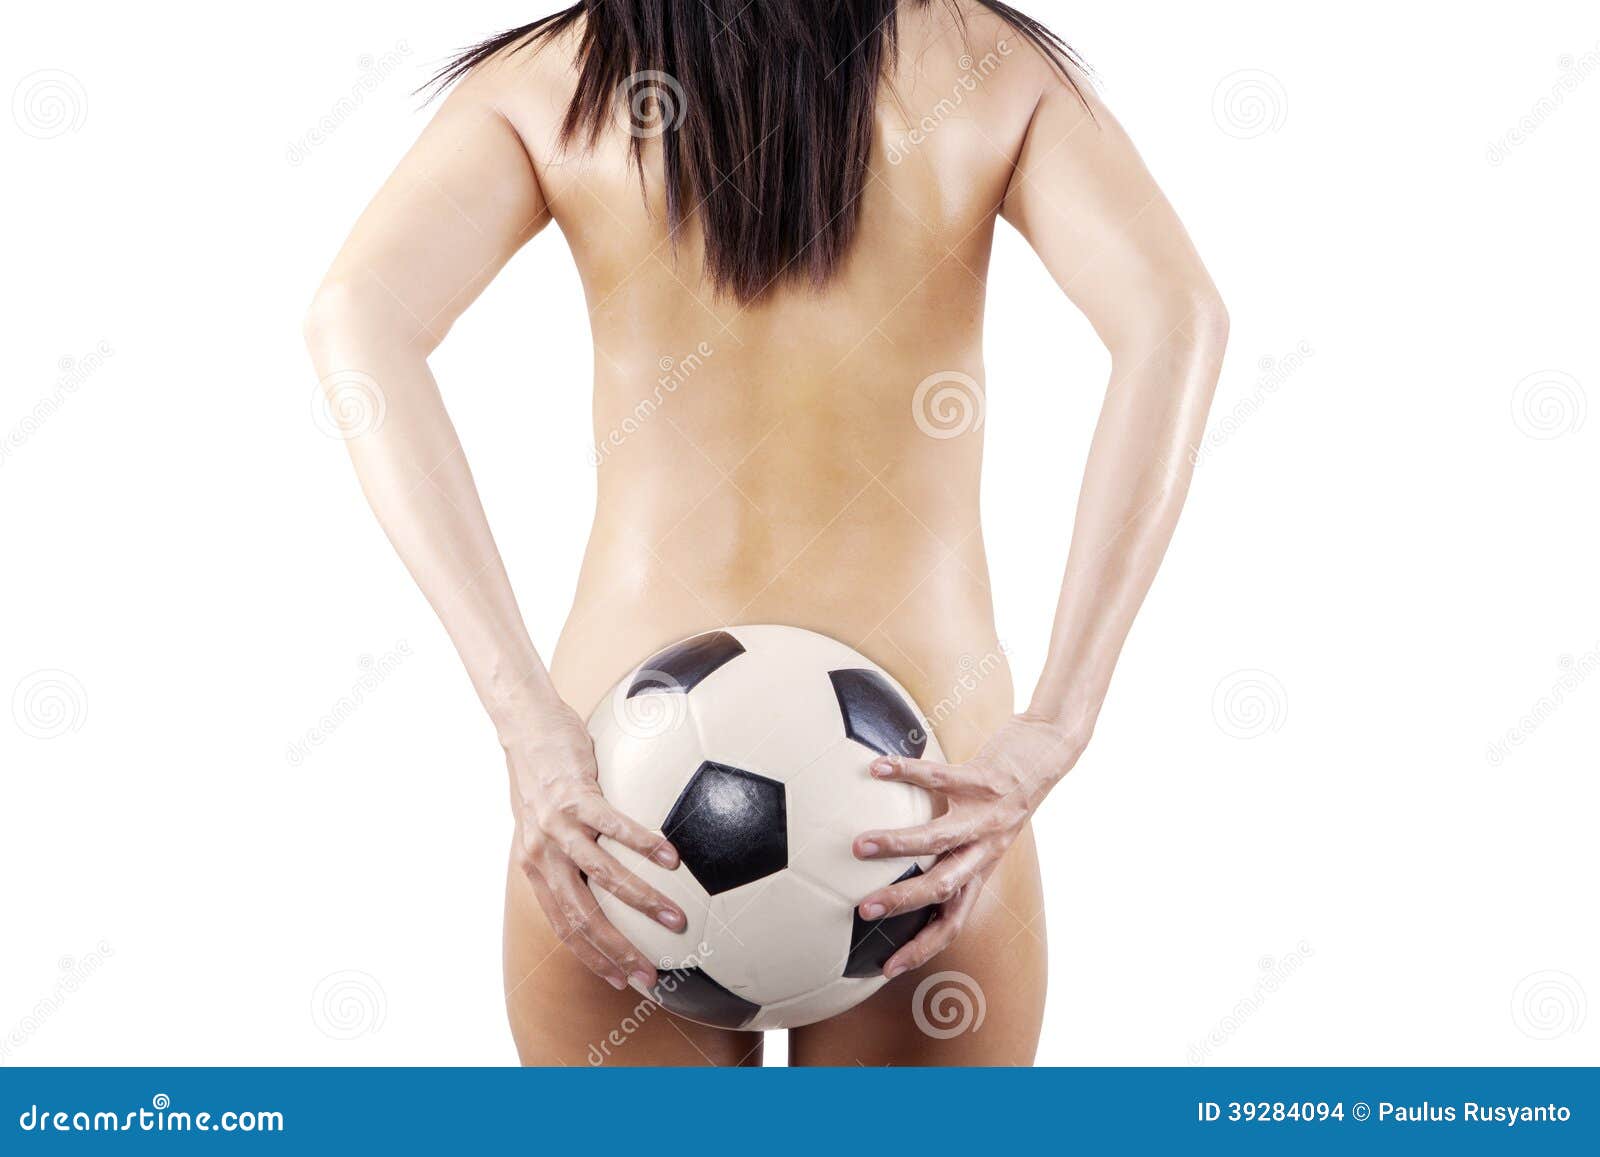 angie pena add photo naked soccer